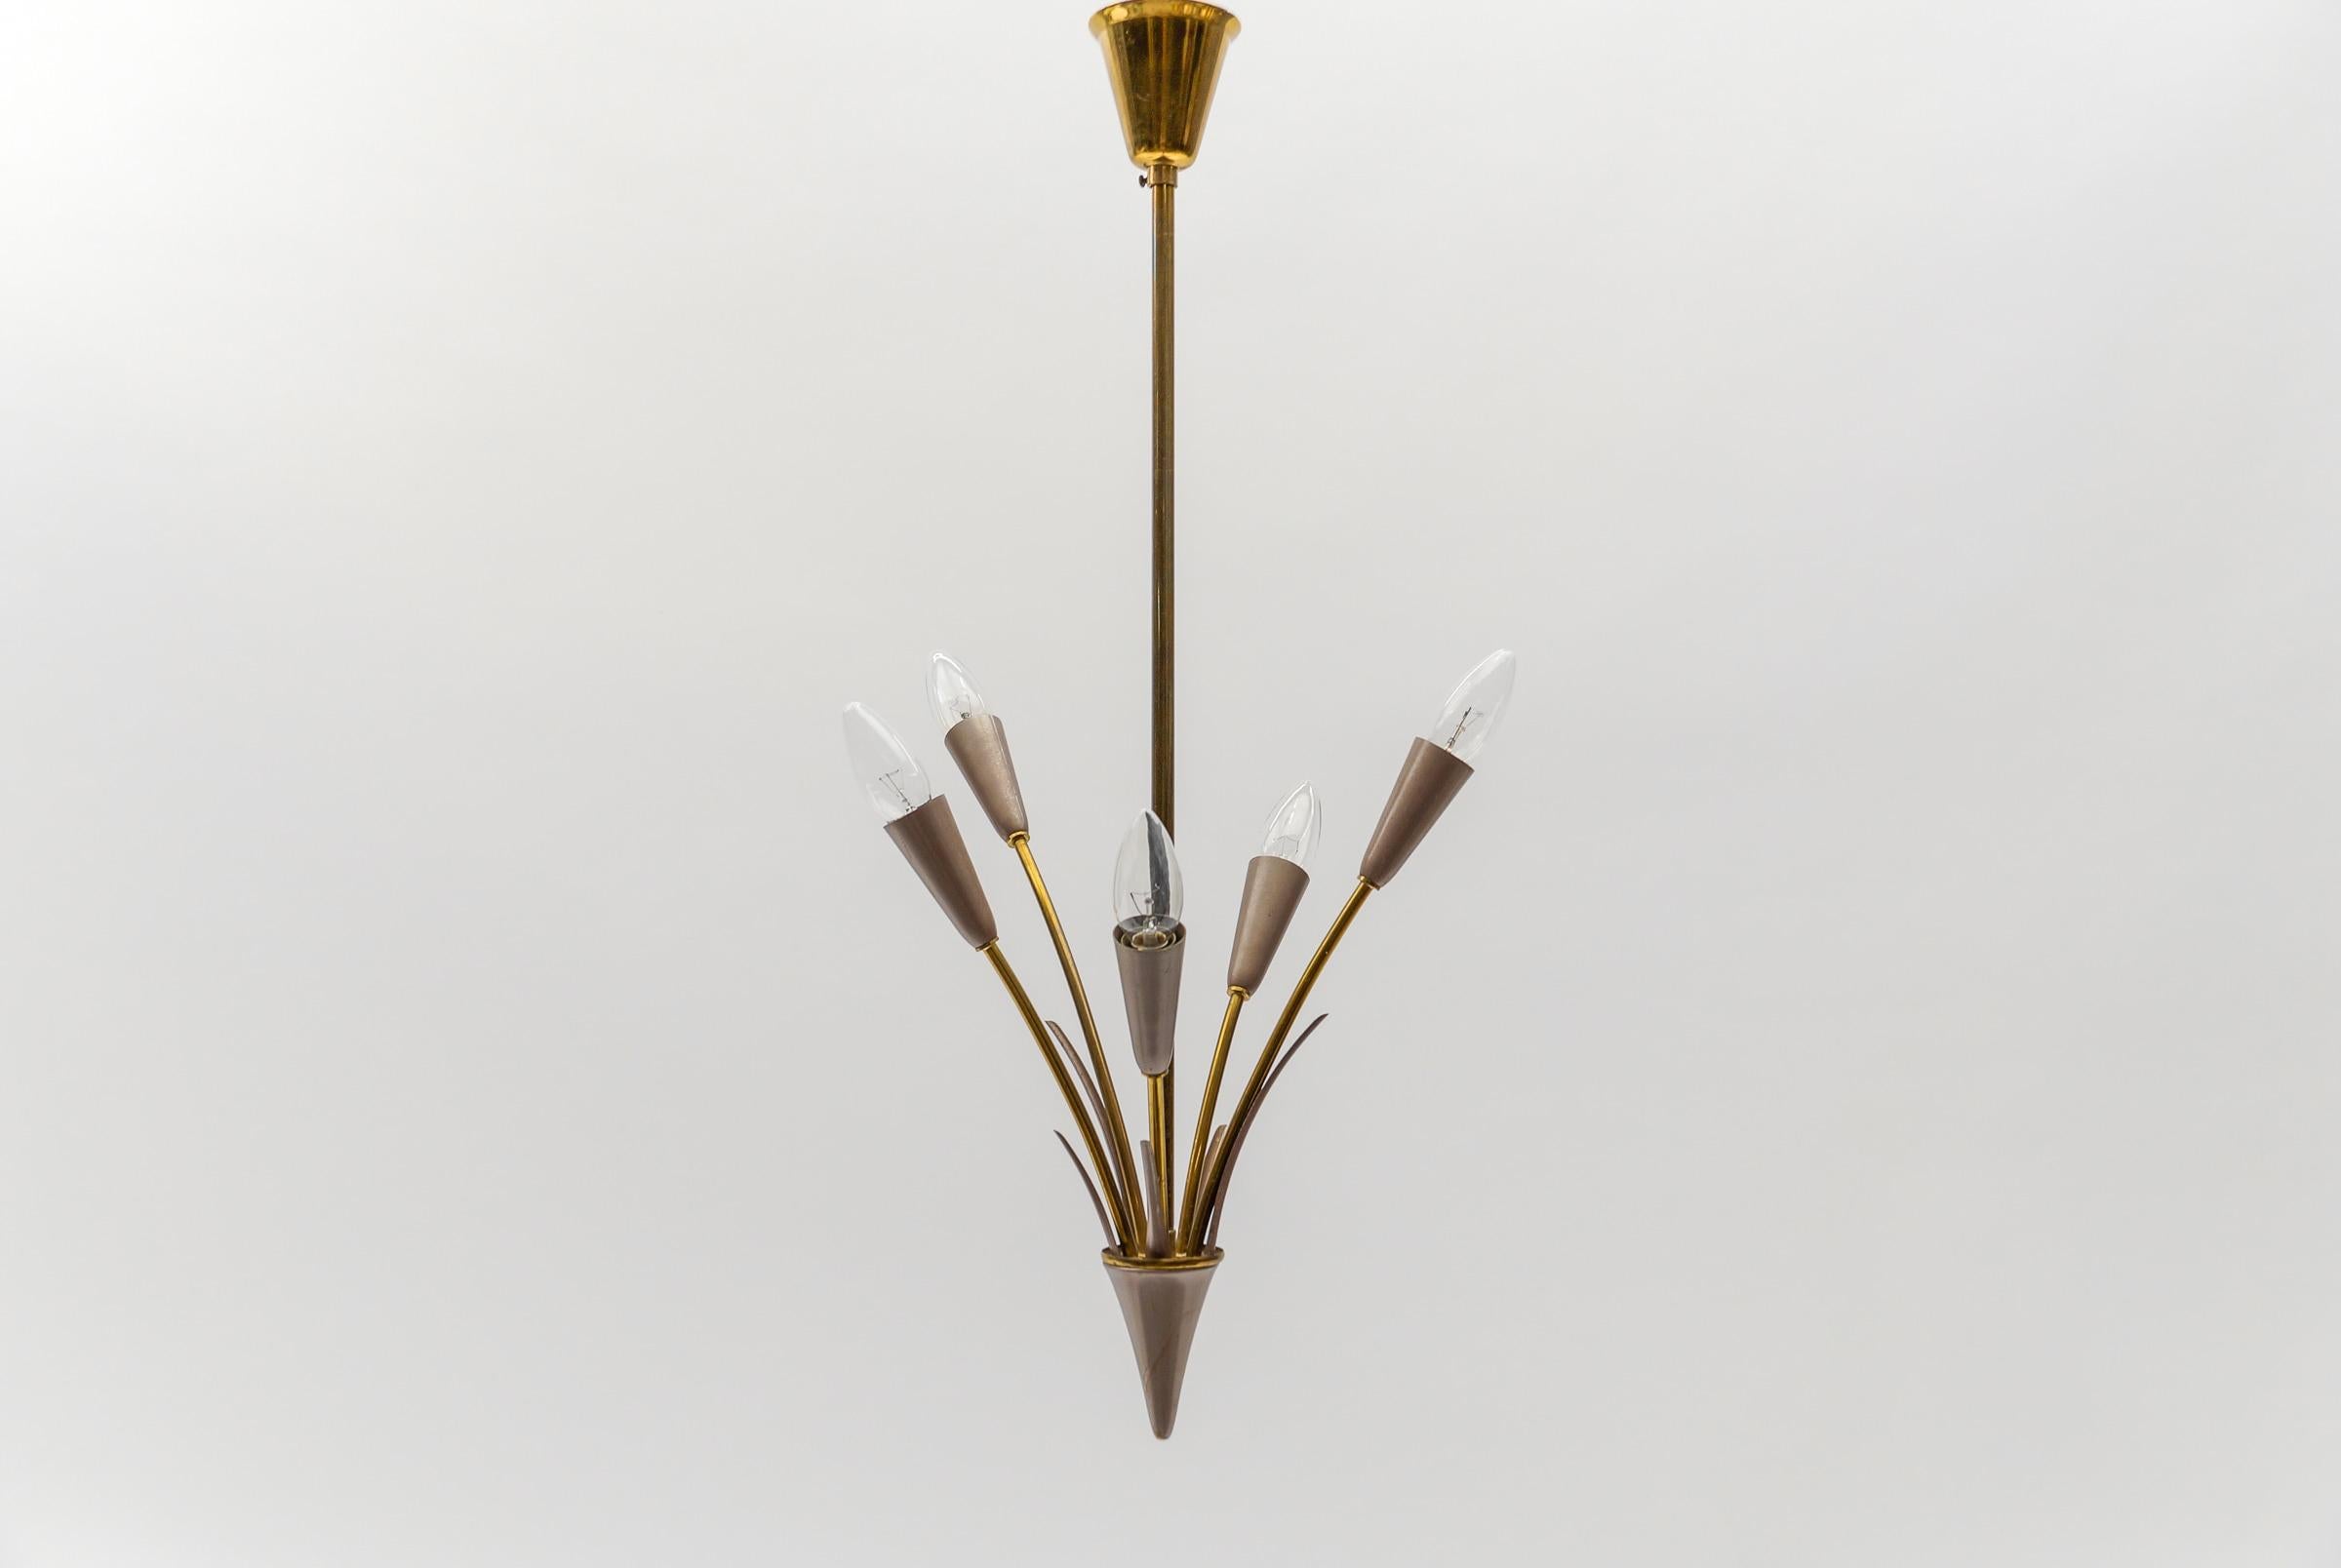 Italian Ceiling Sputnik Lamp in the Manner of Arteluce, Italy, 1950s For Sale